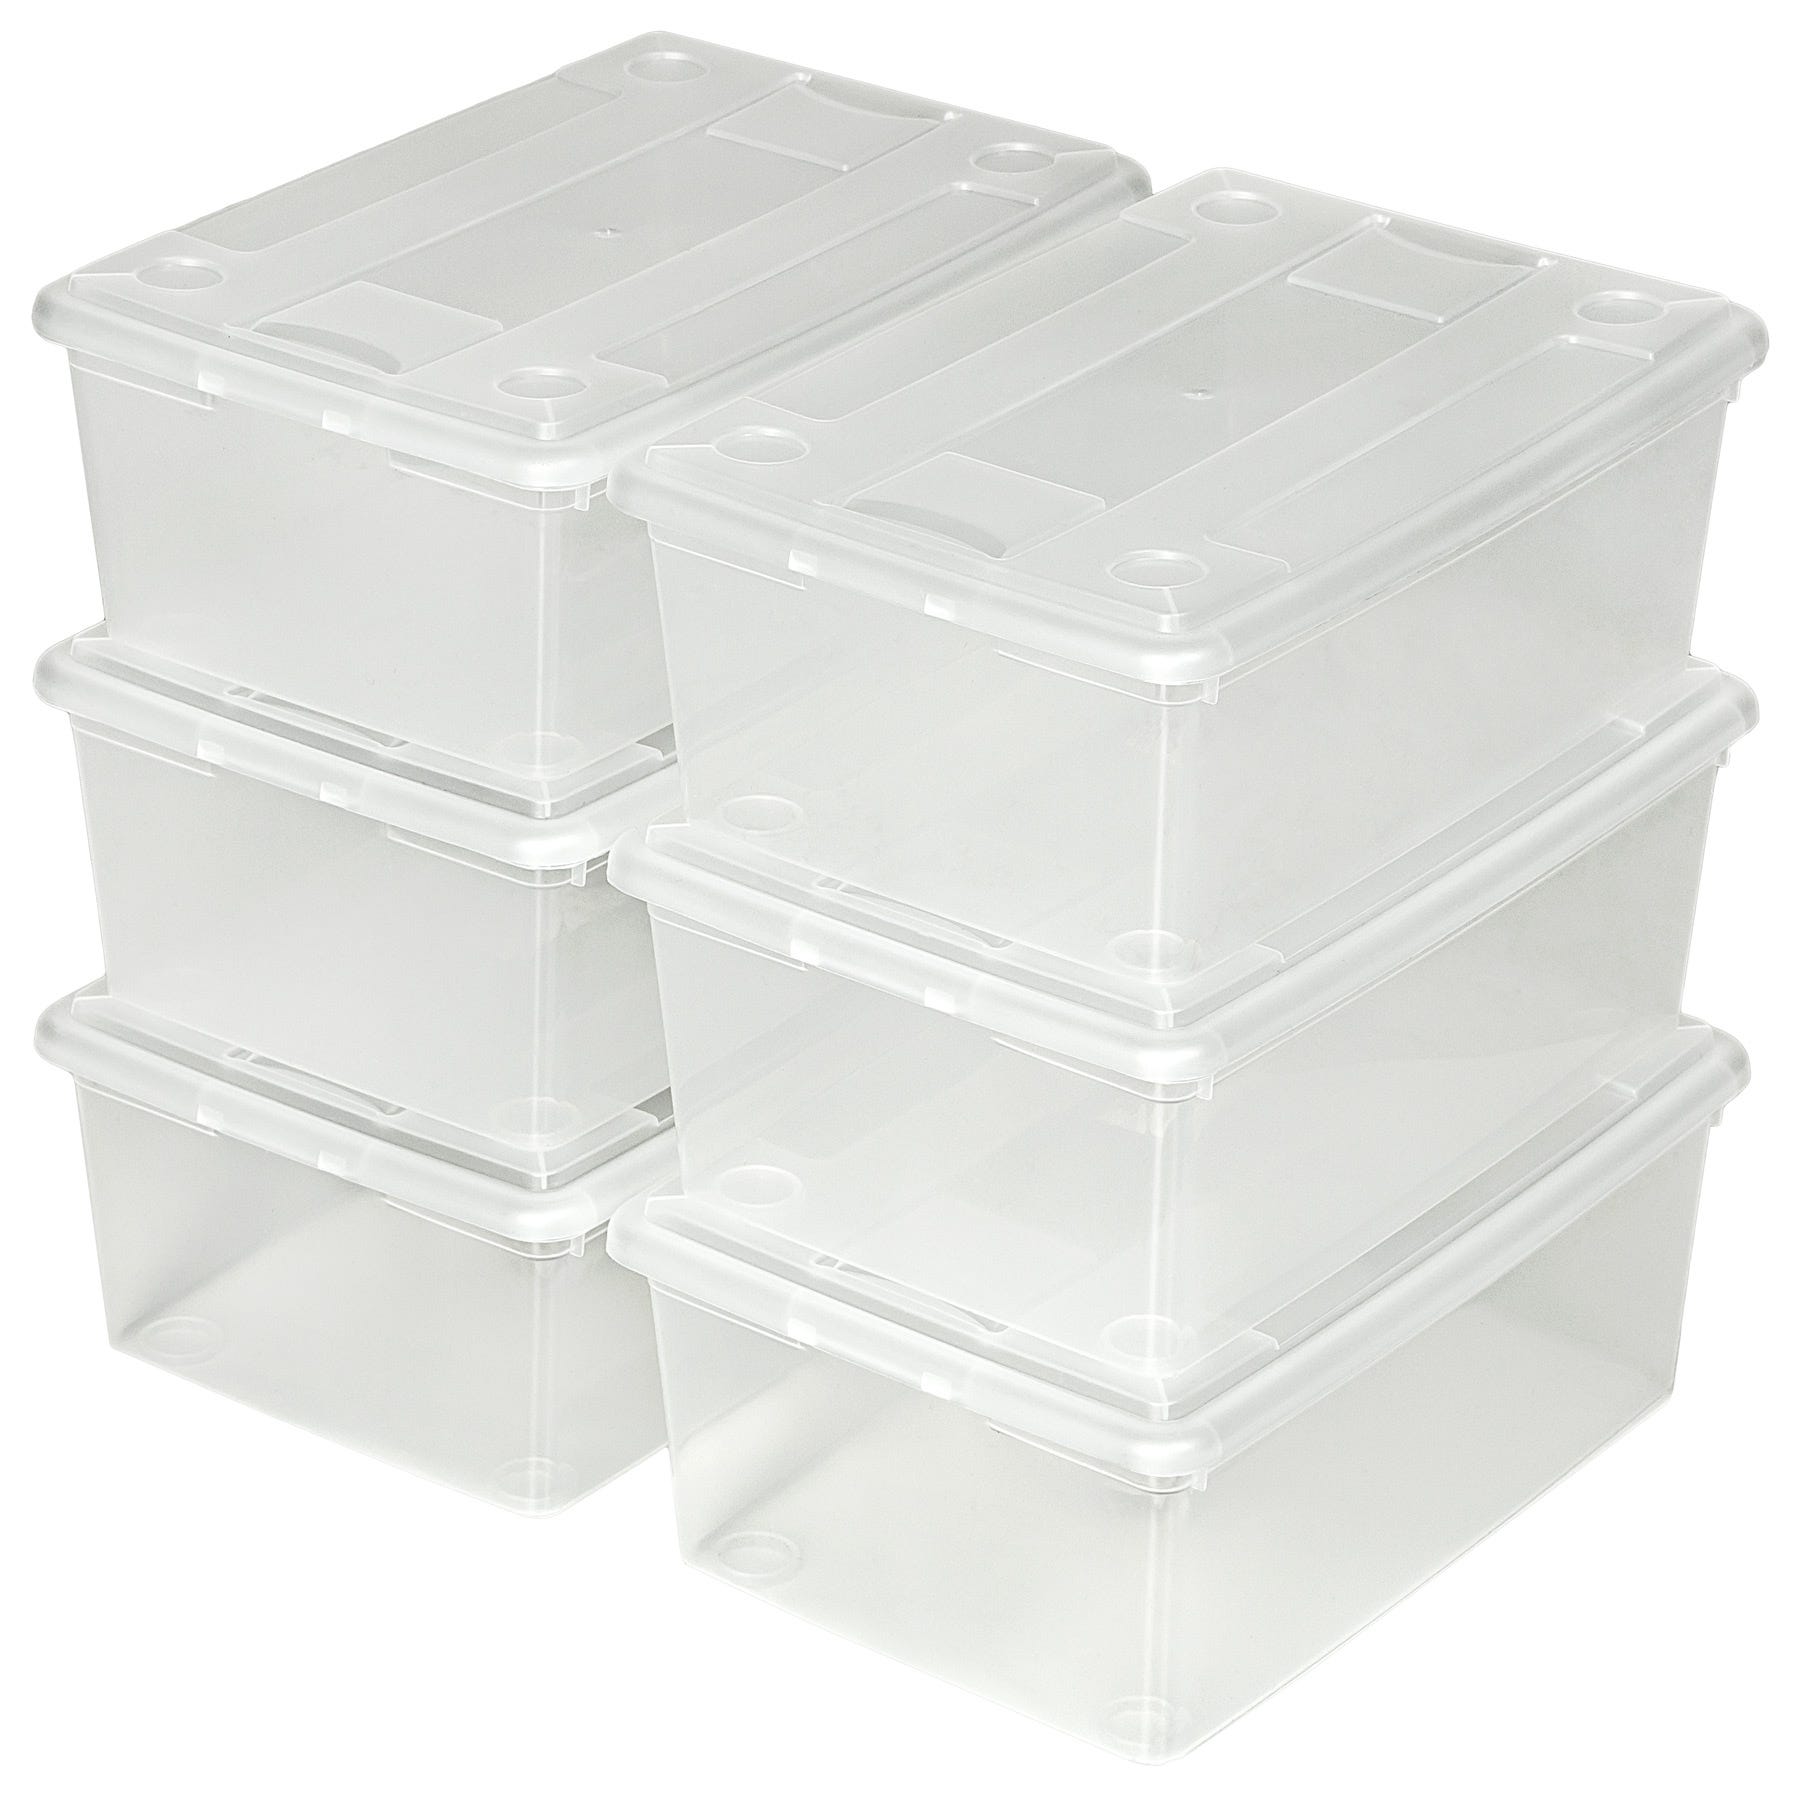 Caja almacenaje con tapa, plástico translúcido, cajón multiusos, ordenación,  almacenamiento de objetos, hogar, 60 litros, 29,7 x